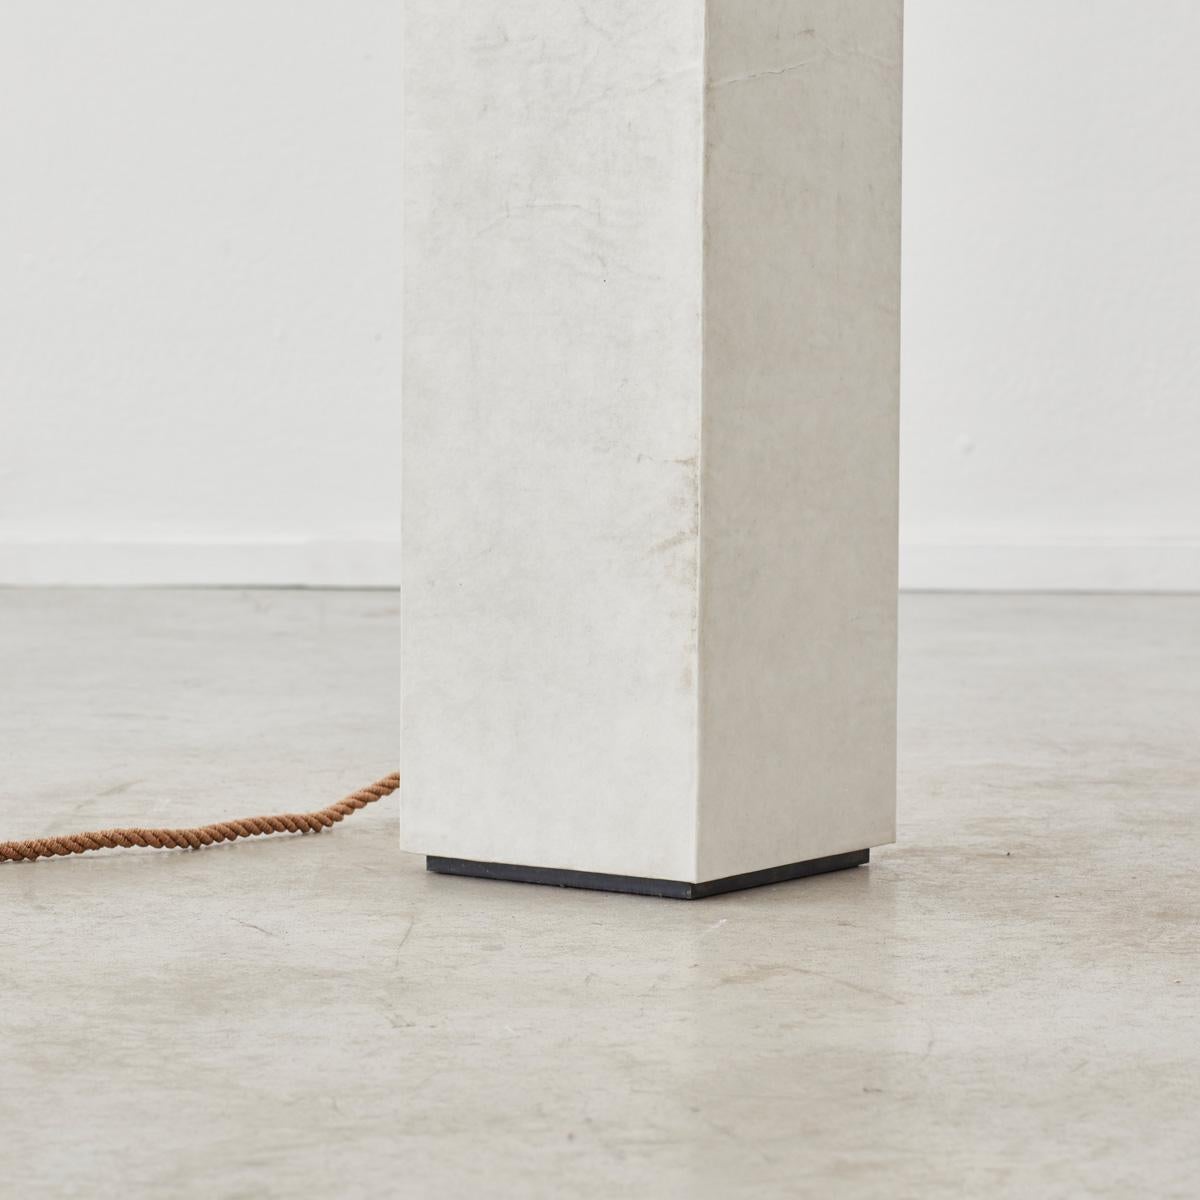 David Horan Paper floor light in semi-matte finish for Béton Brut, UK, 2022 For Sale 5